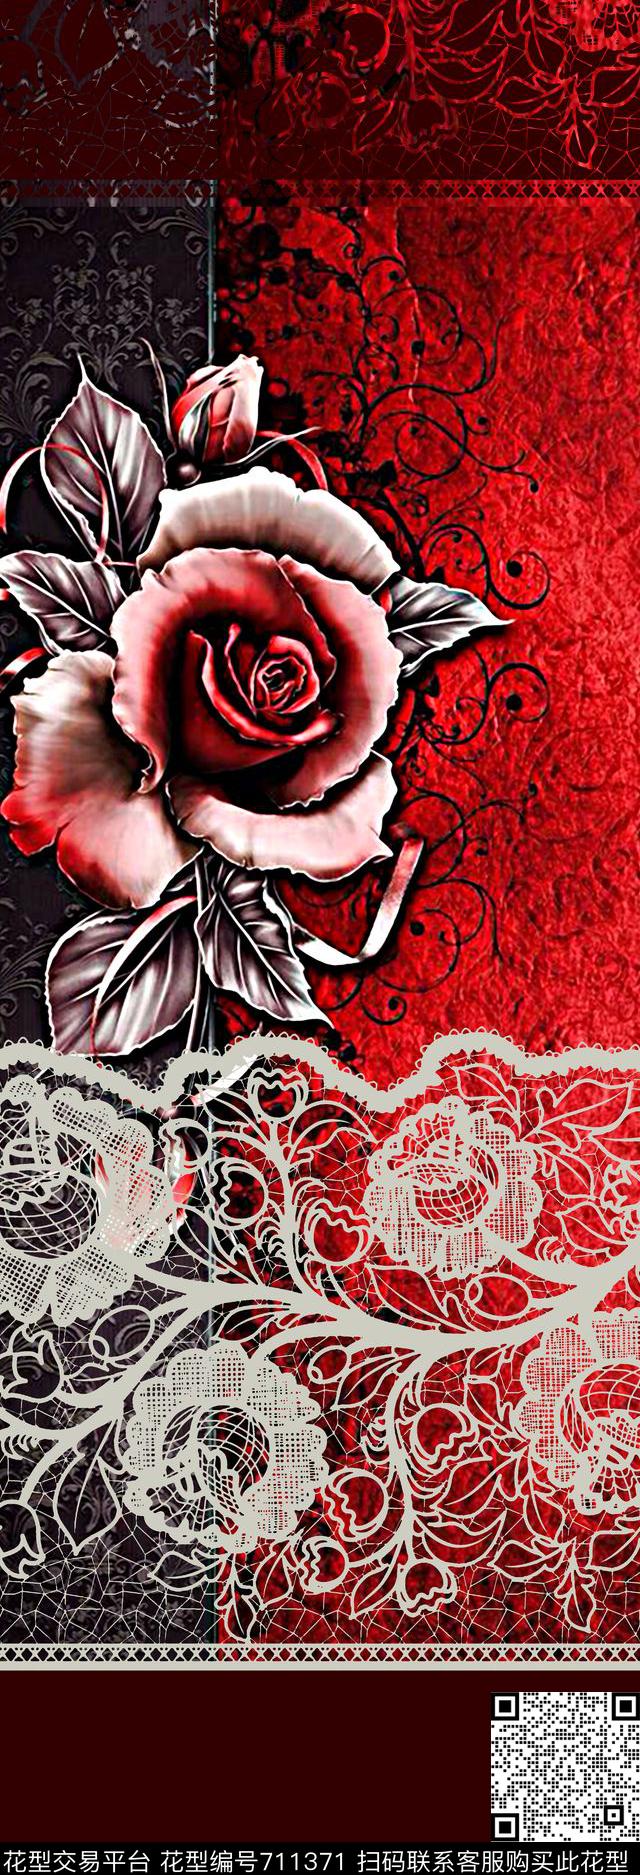 1092a-1.tif - 711371 - 抽象手绘分形艺术玫瑰花数码印花 时尚潮流大牌女装裙子丝巾印花 蕾丝几何渐变纹理印花 - 数码印花花型 － 长巾花型设计 － 瓦栏